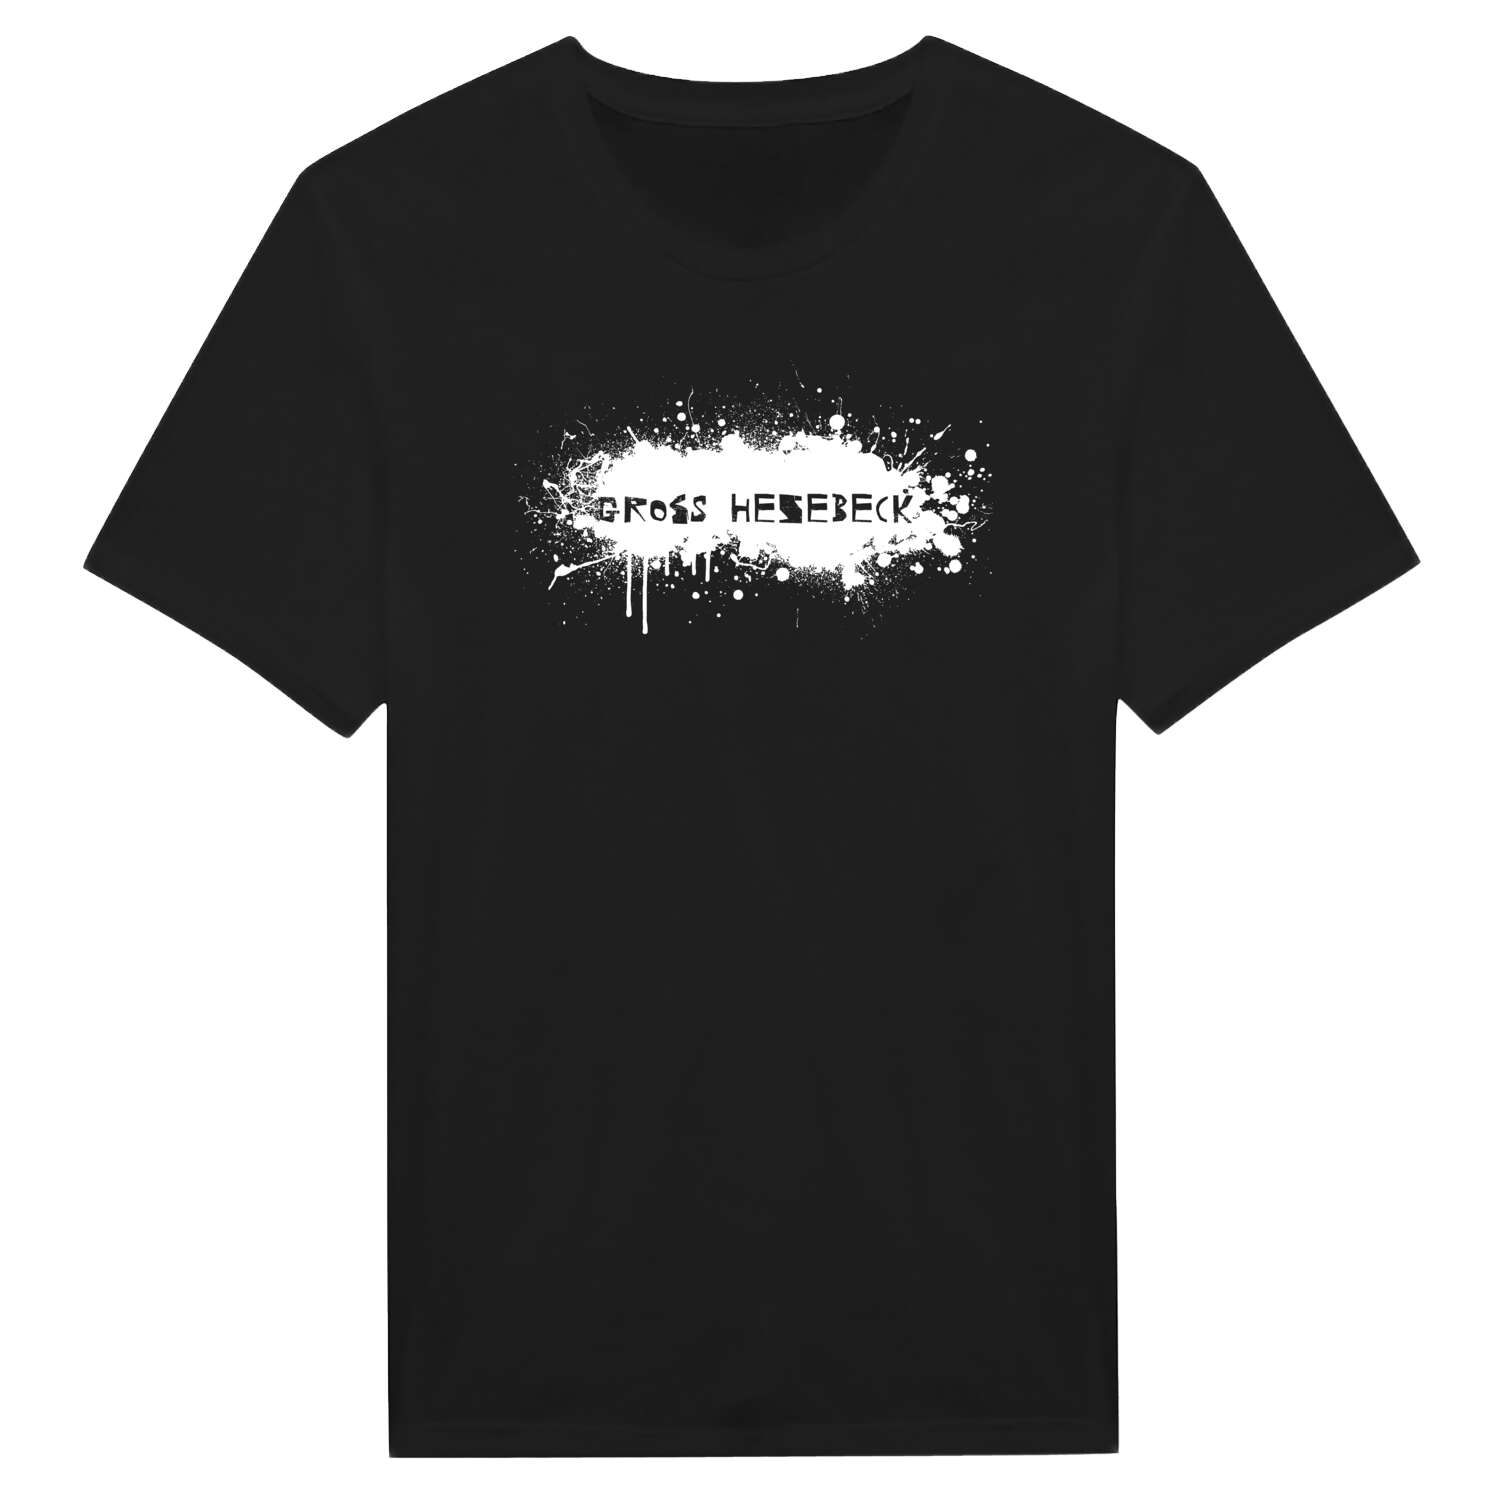 Groß Hesebeck T-Shirt »Paint Splash Punk«